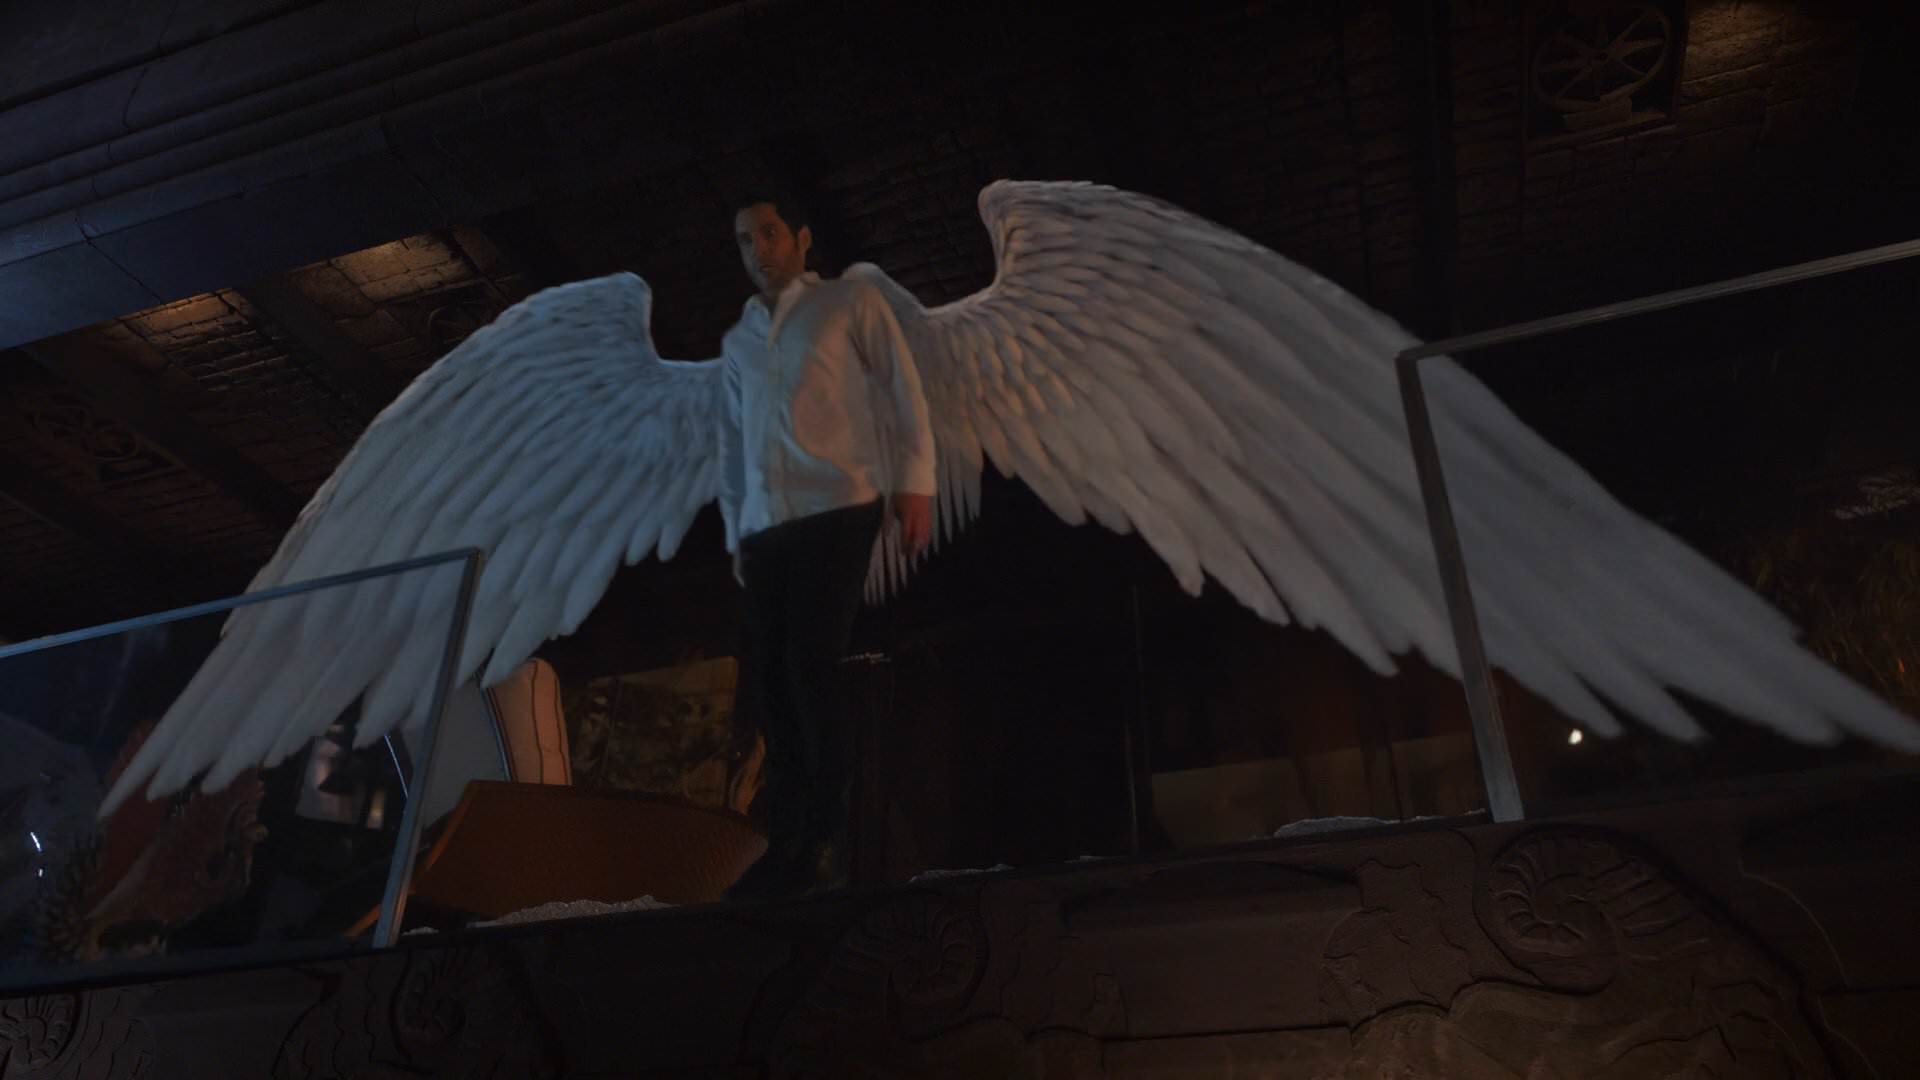 Lucifer's wings